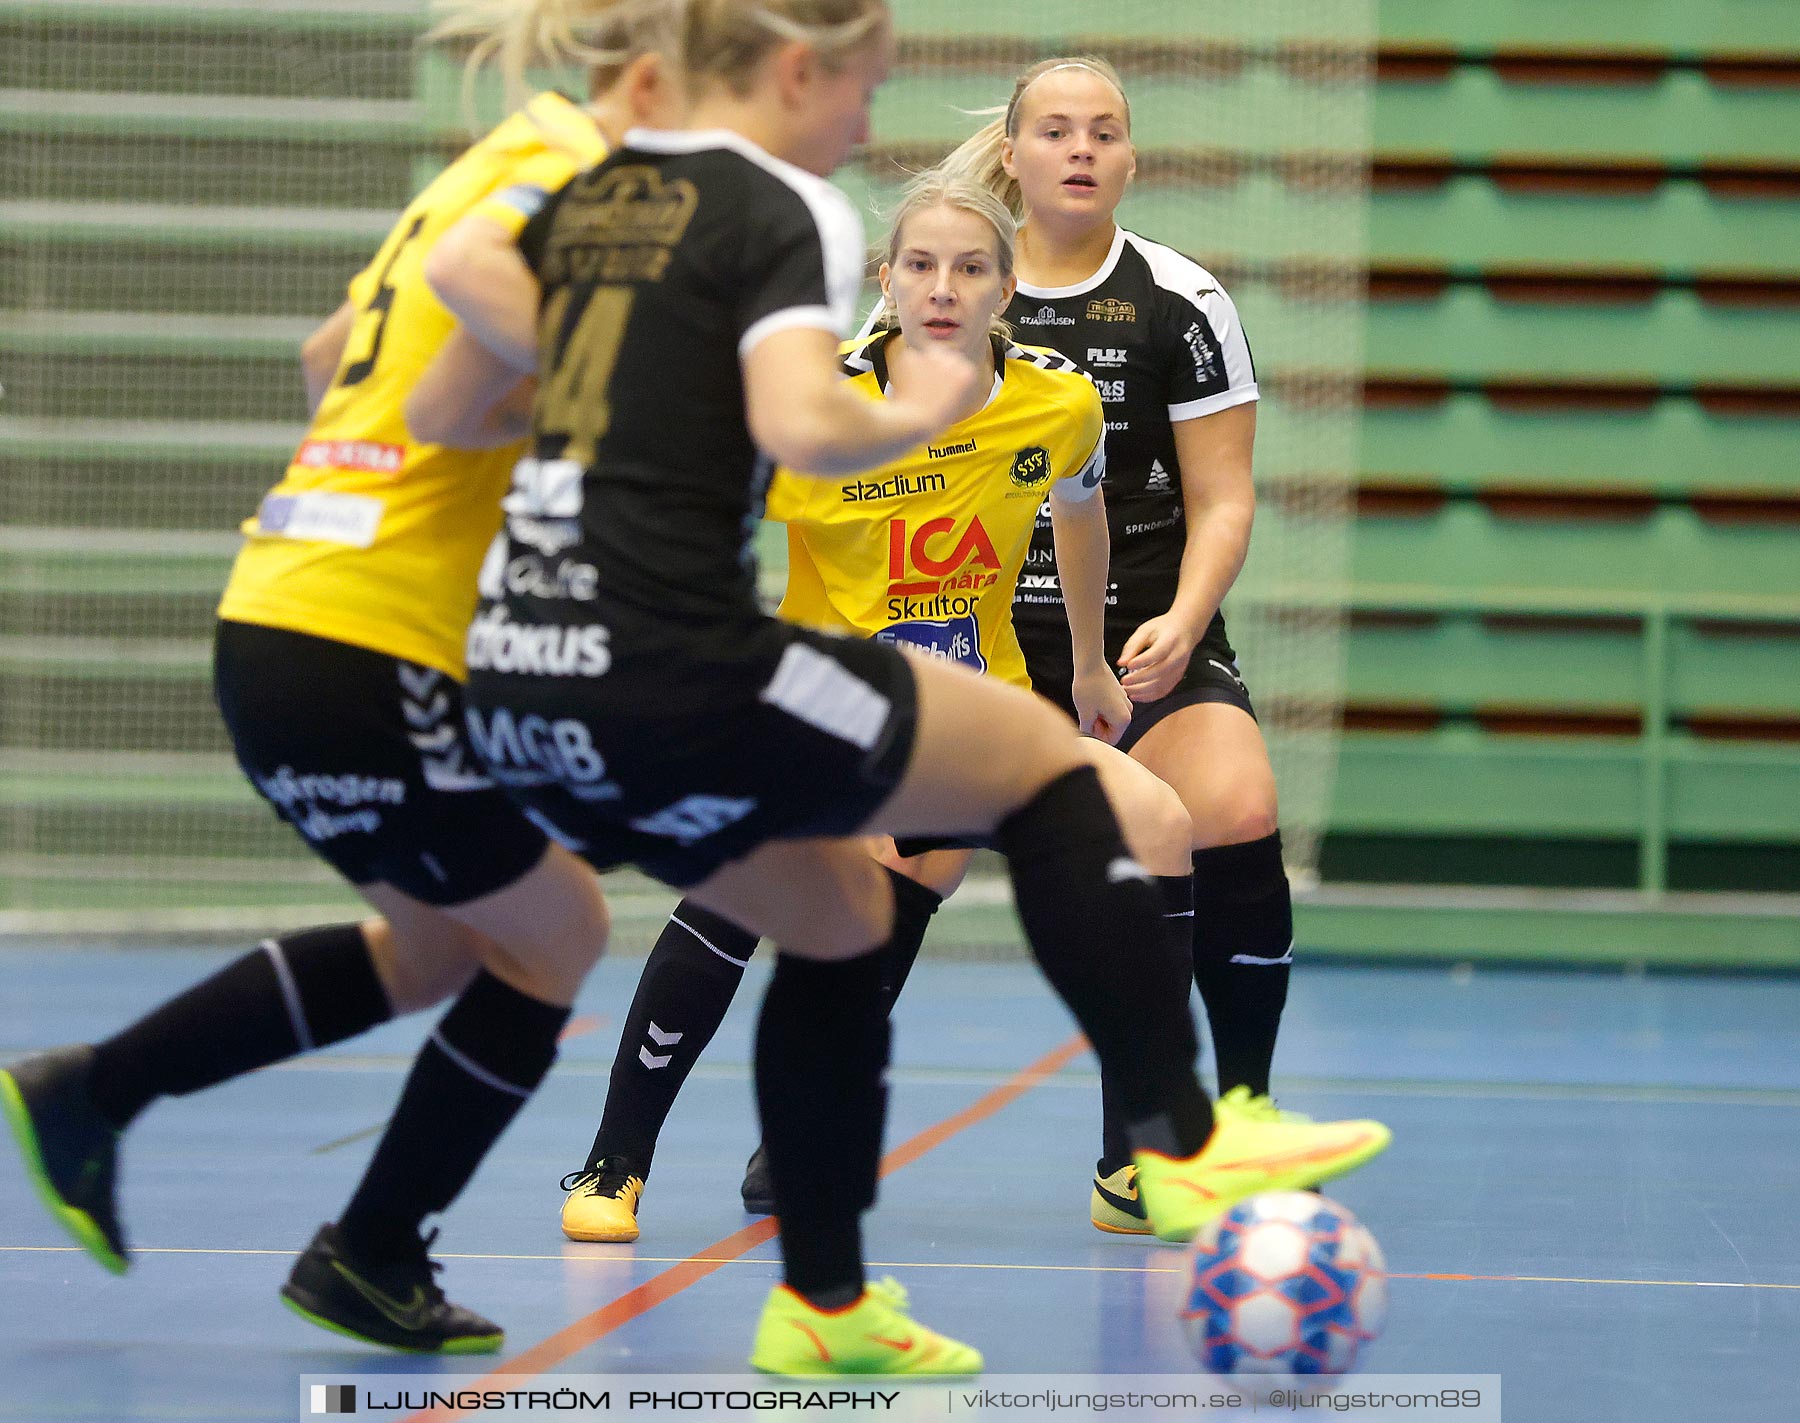 Skövde Futsalcup 2021 Damer Örebro Futsal Club-Skultorps IF 2,dam,Arena Skövde,Skövde,Sverige,Futsal,,2021,270460